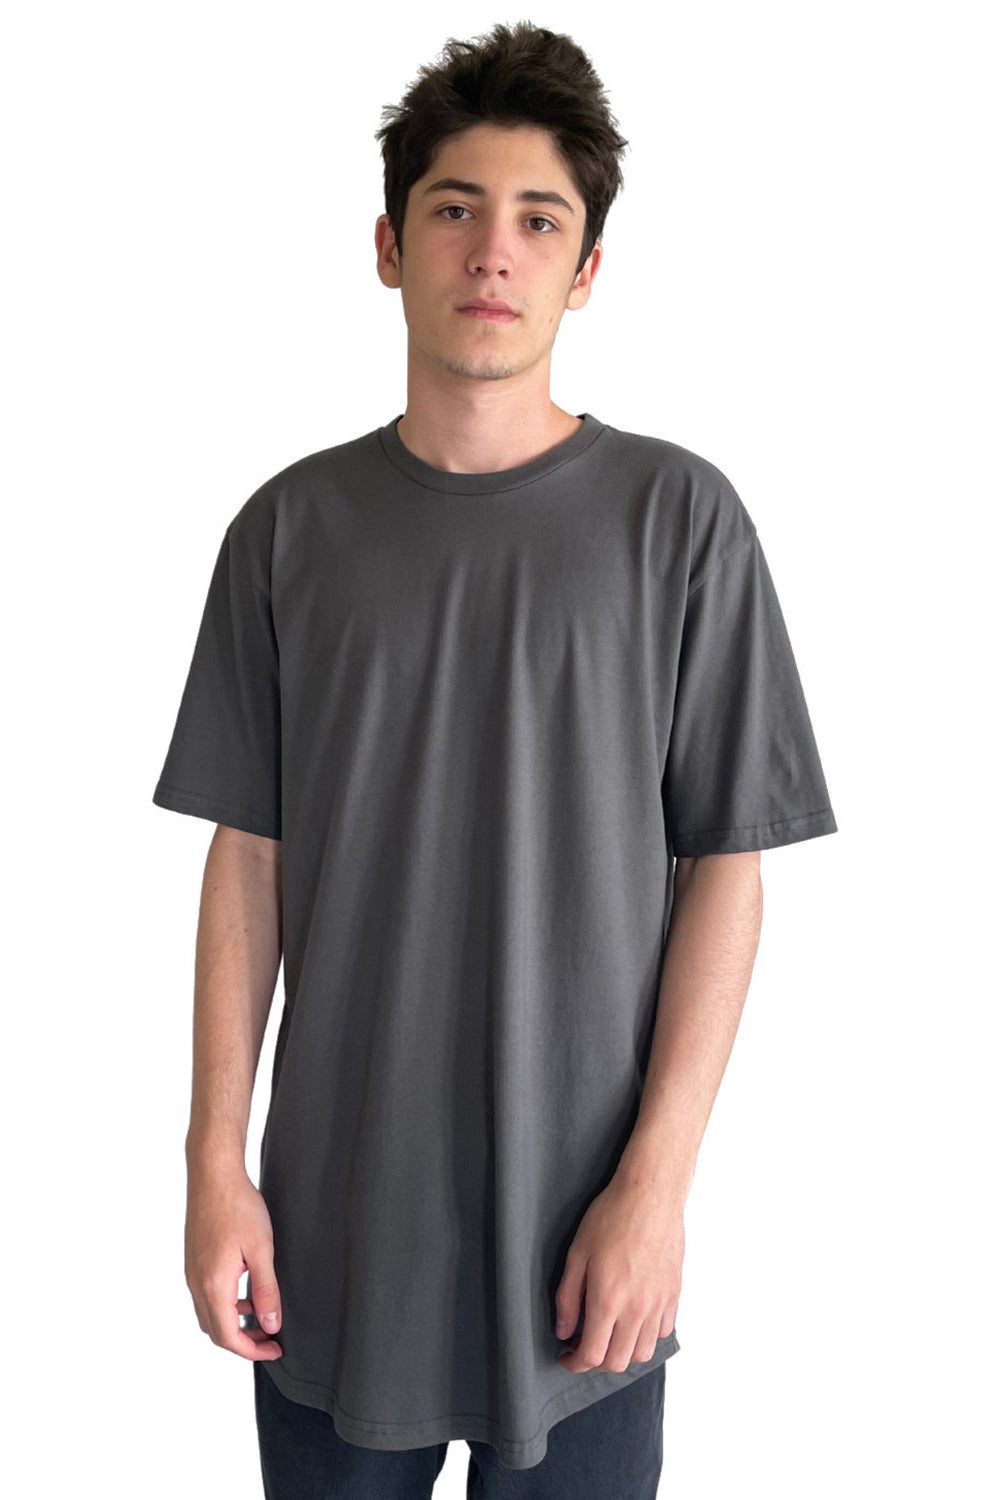 Next Level 3602 Mens Long Body Jersey Short Sleeve Crewneck T-Shirt Heavy Metal Grey Front